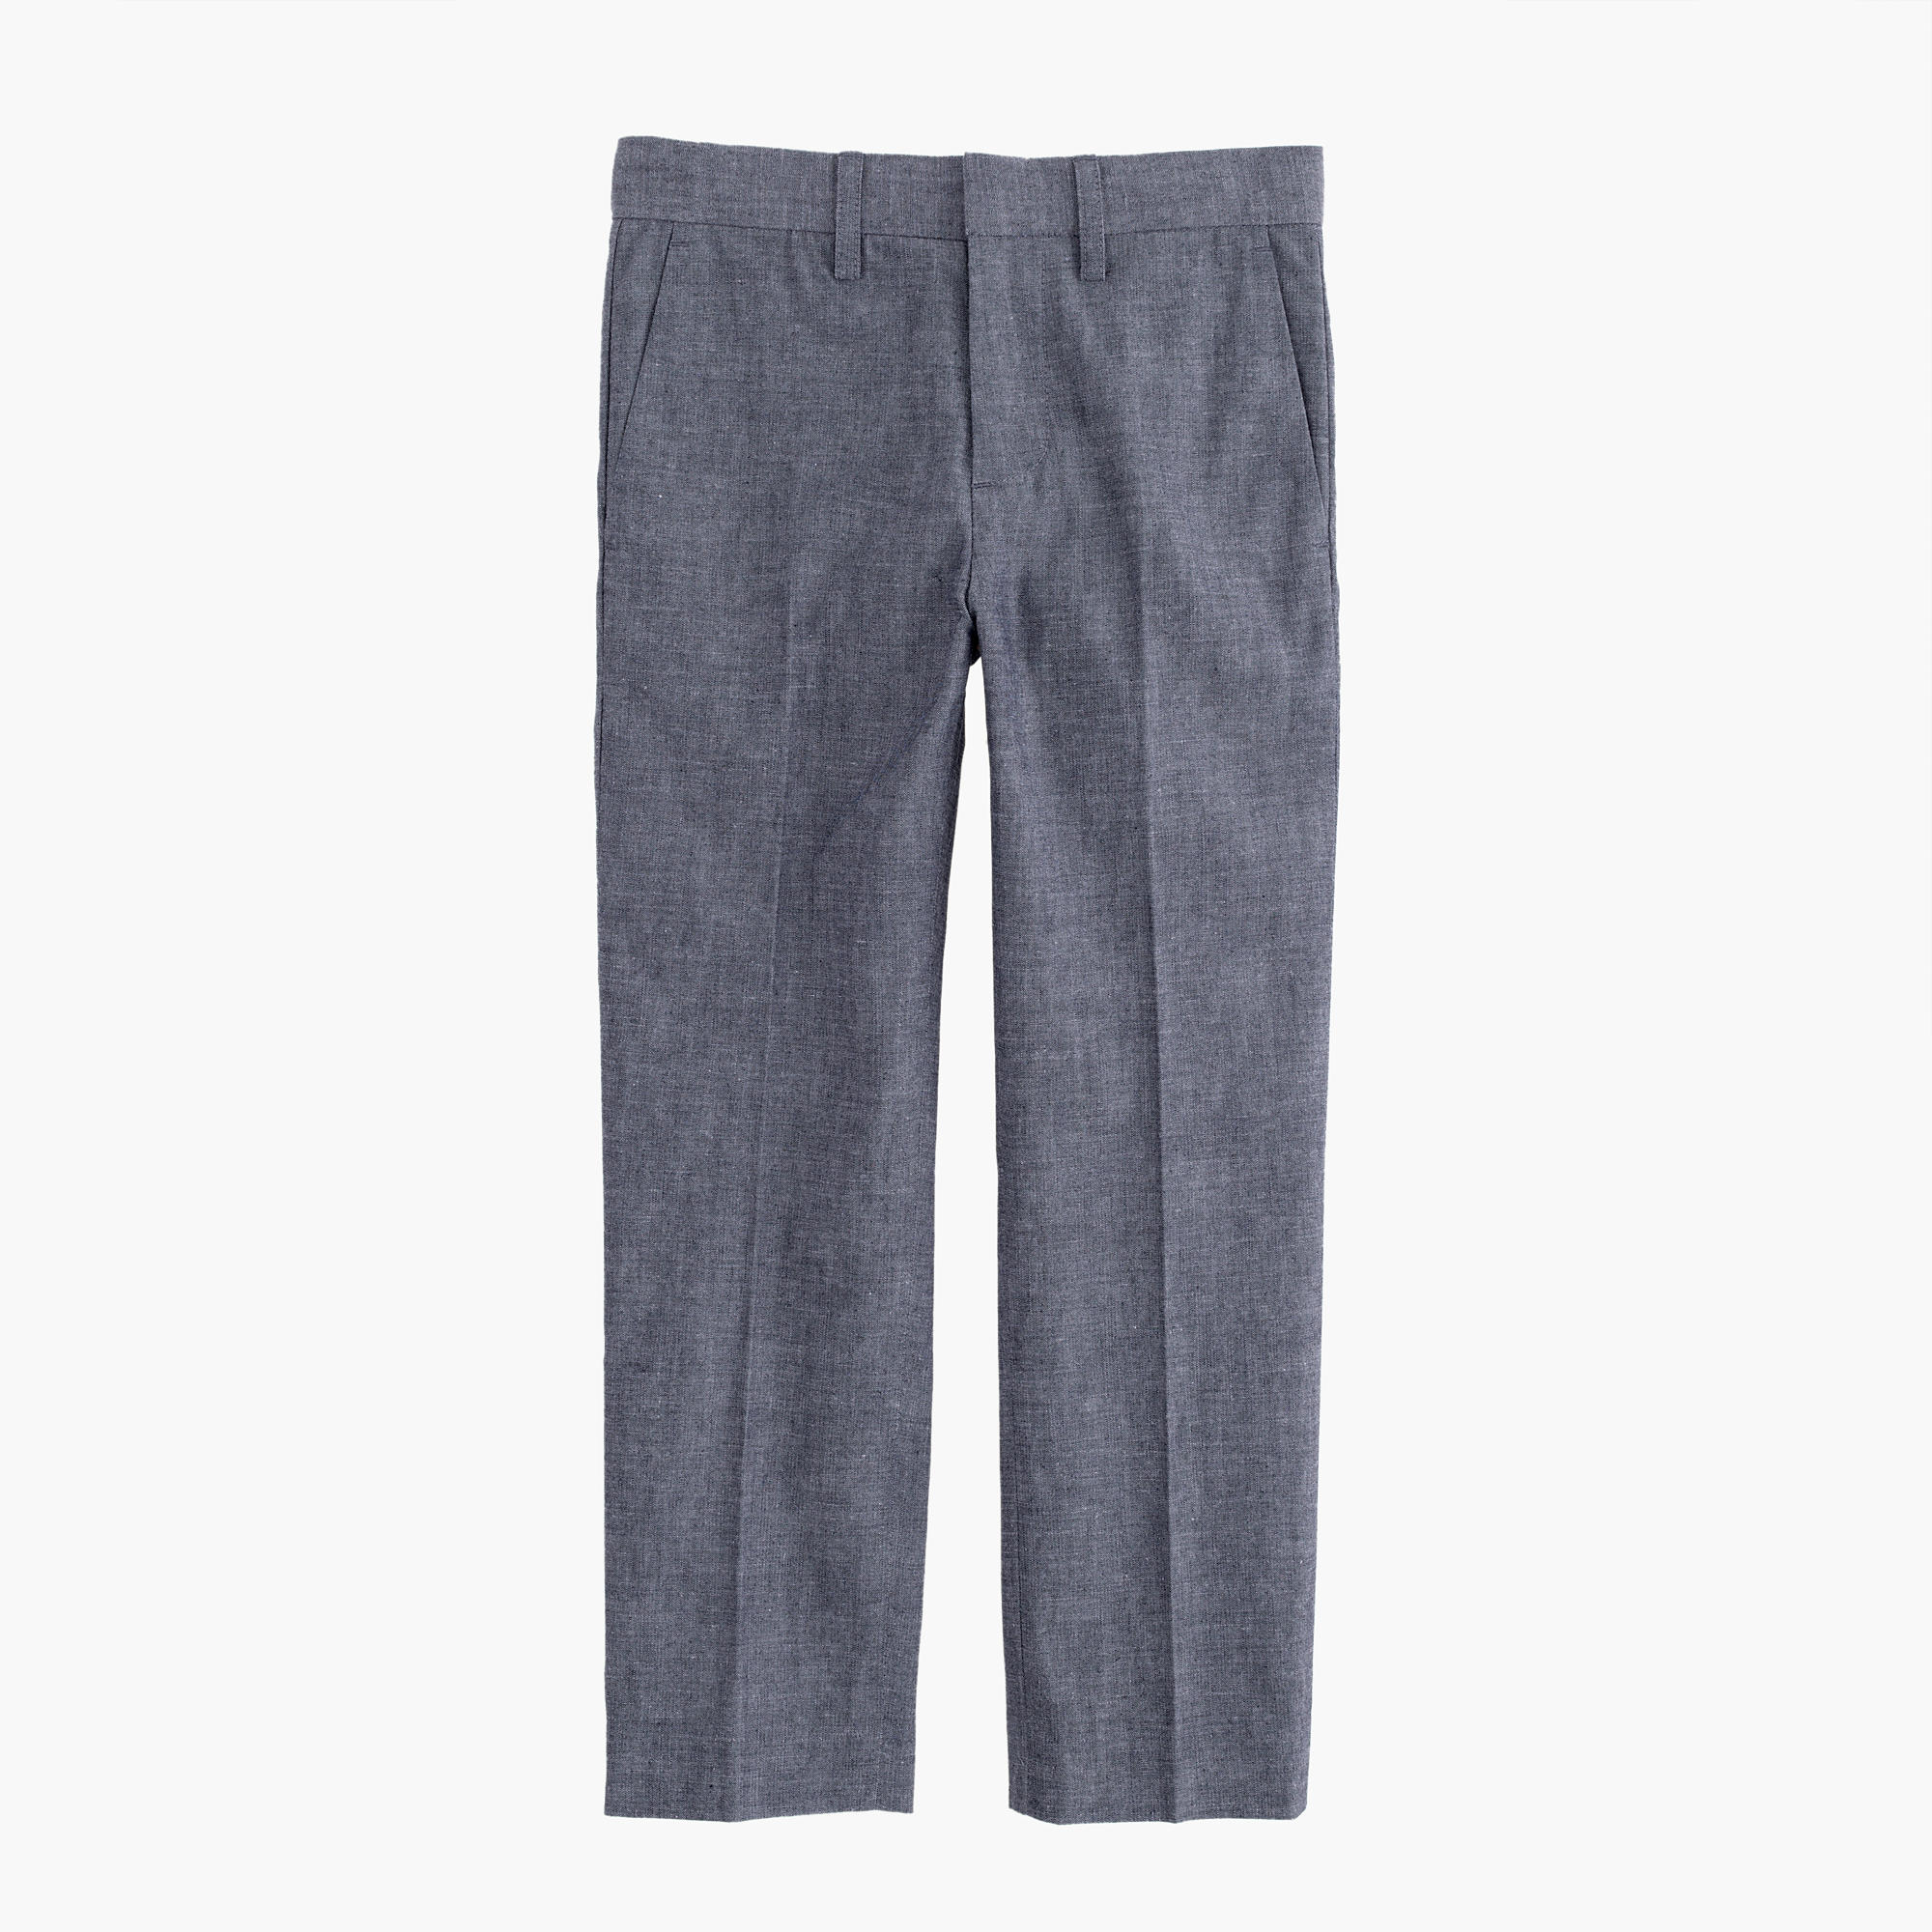 Boys' slim Ludlow suit pant in Japanese chambray : Boy pants | J.Crew